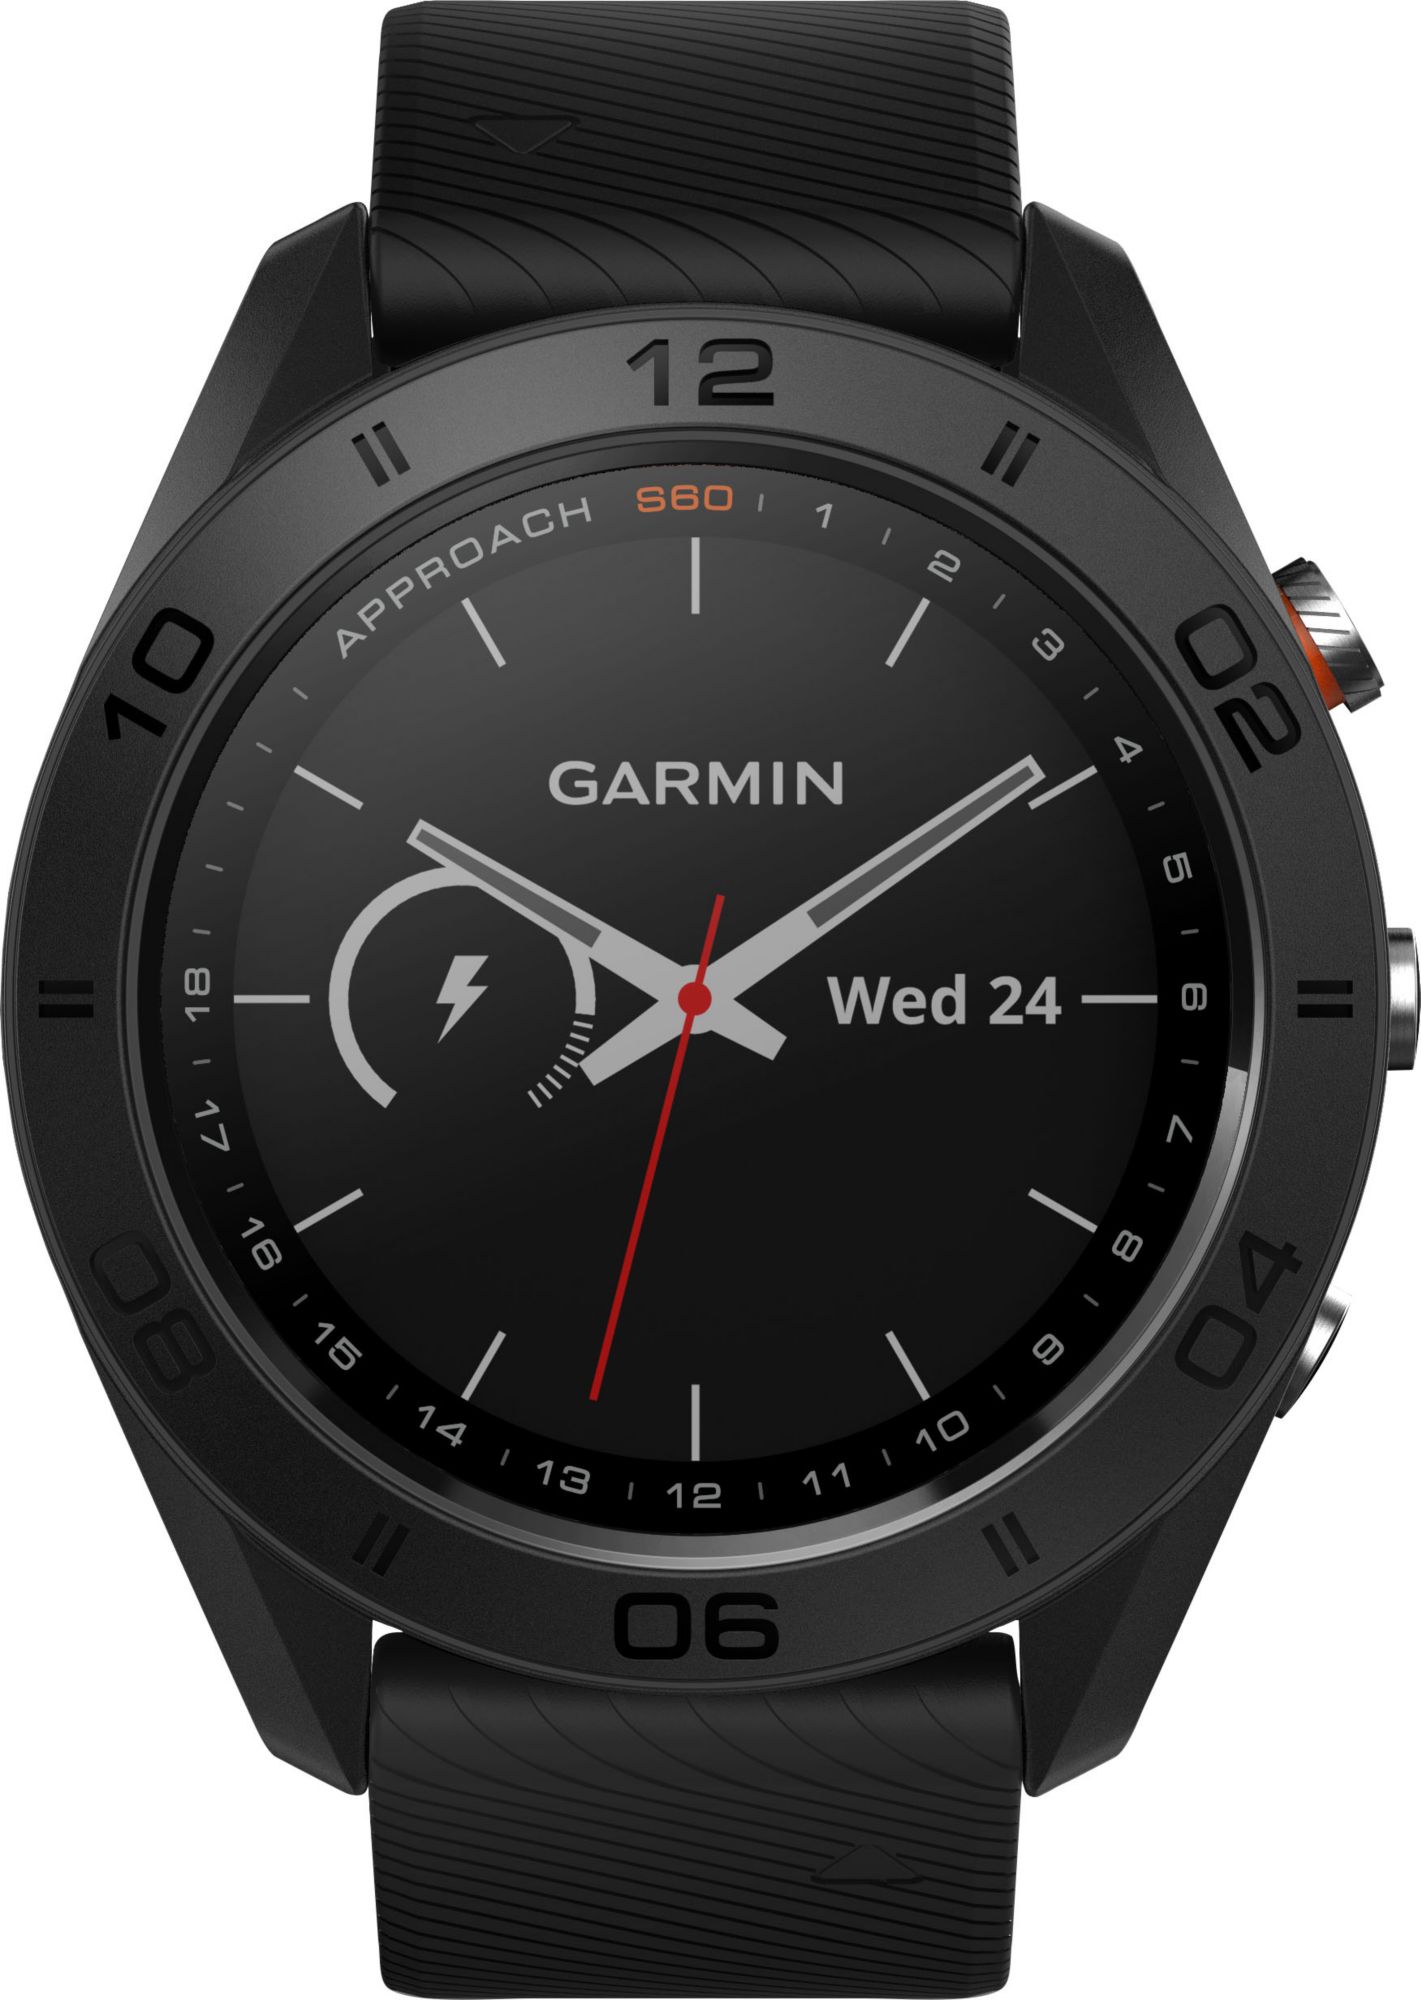 Garmin Approach S60 GPS Smartwatch | Golf Galaxy